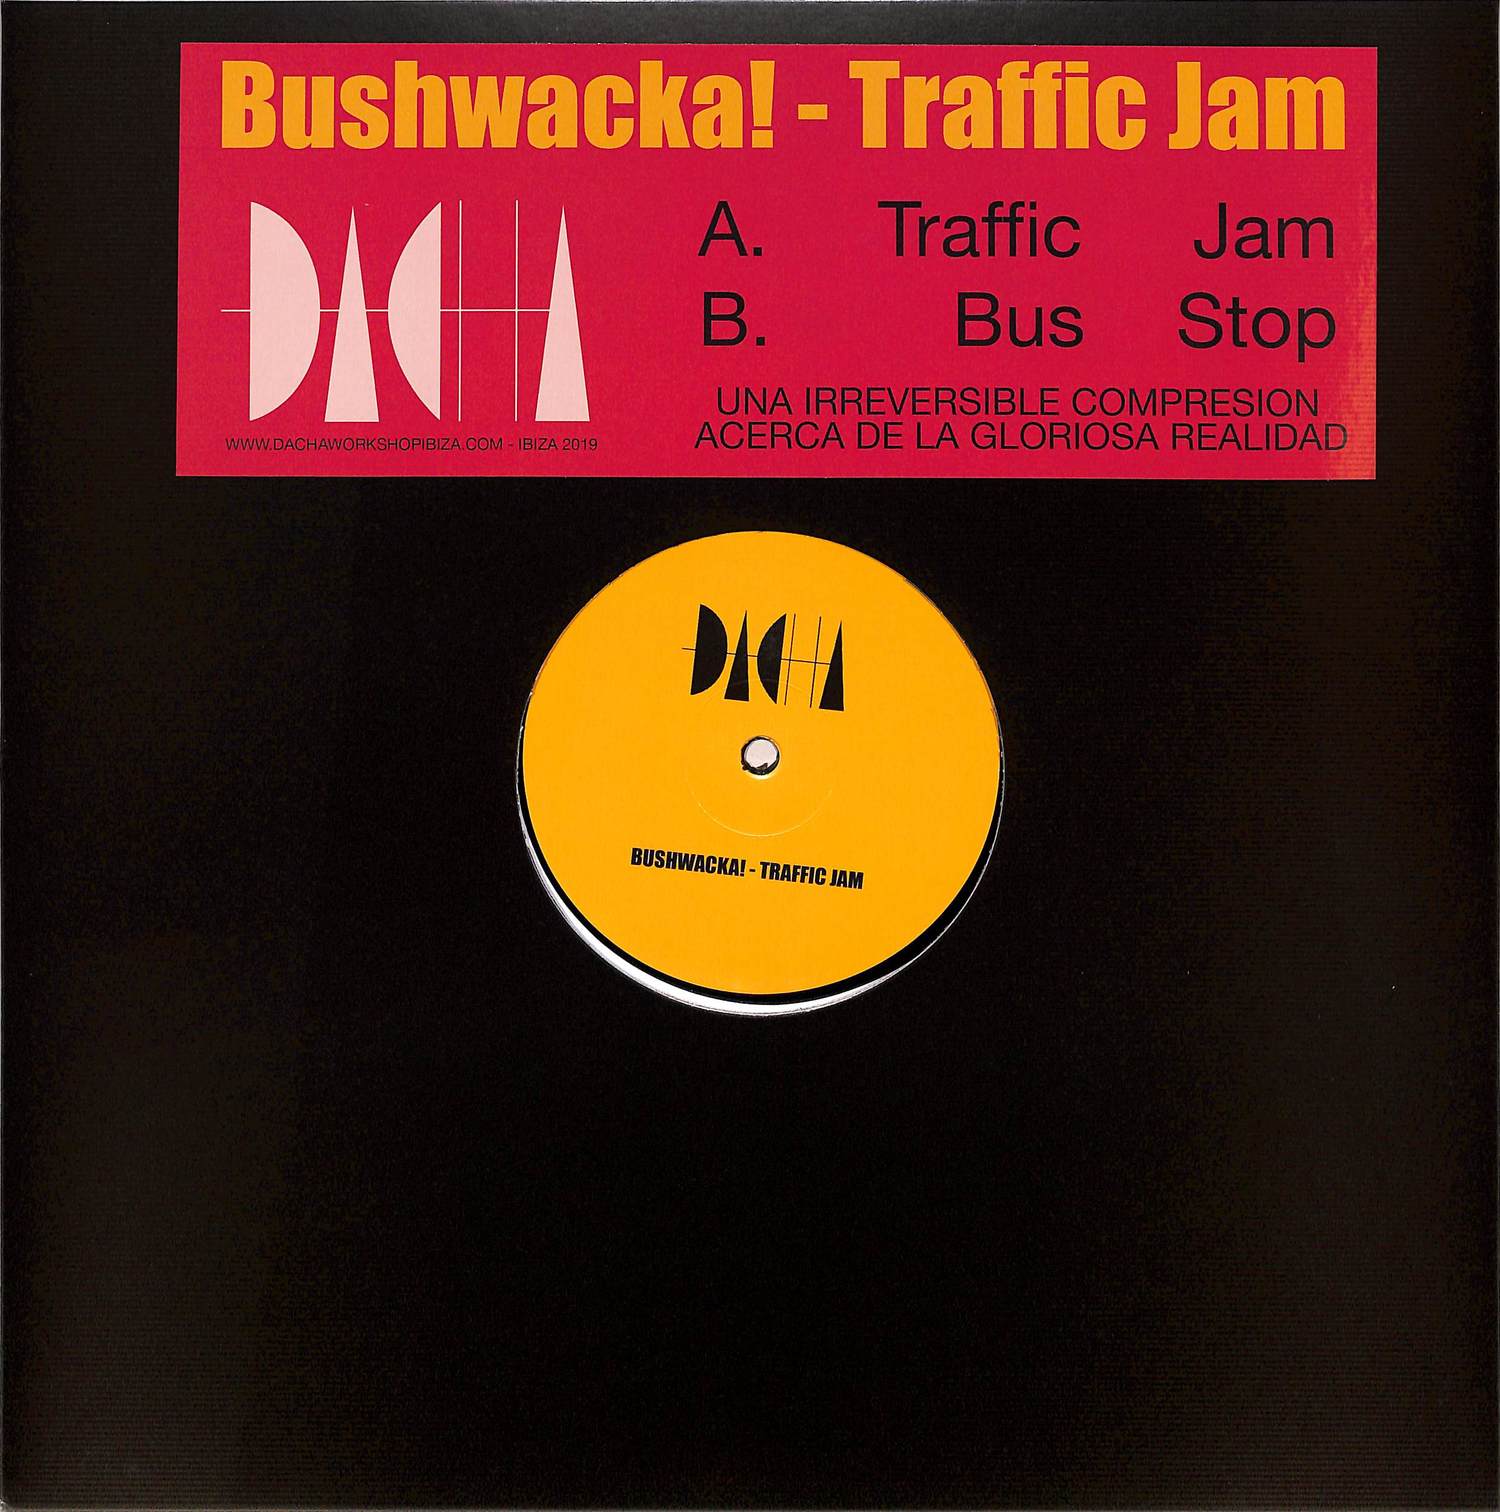 Bushwacka! - TRAFFIC JAM